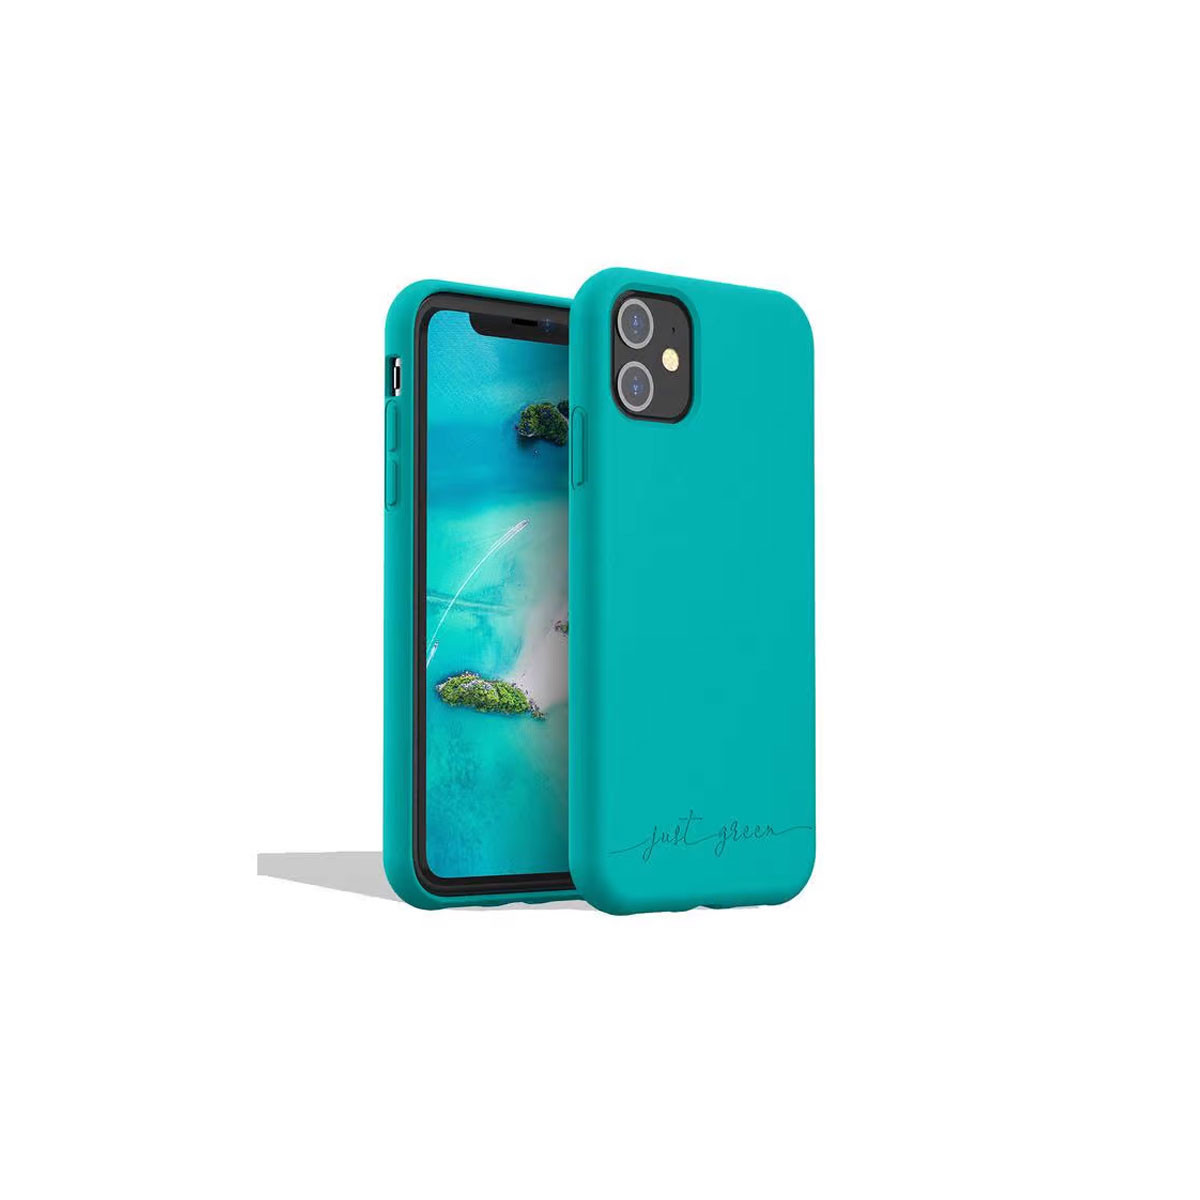 Carcasa biodegradable azul Just Green para el iPhone 11 - 1